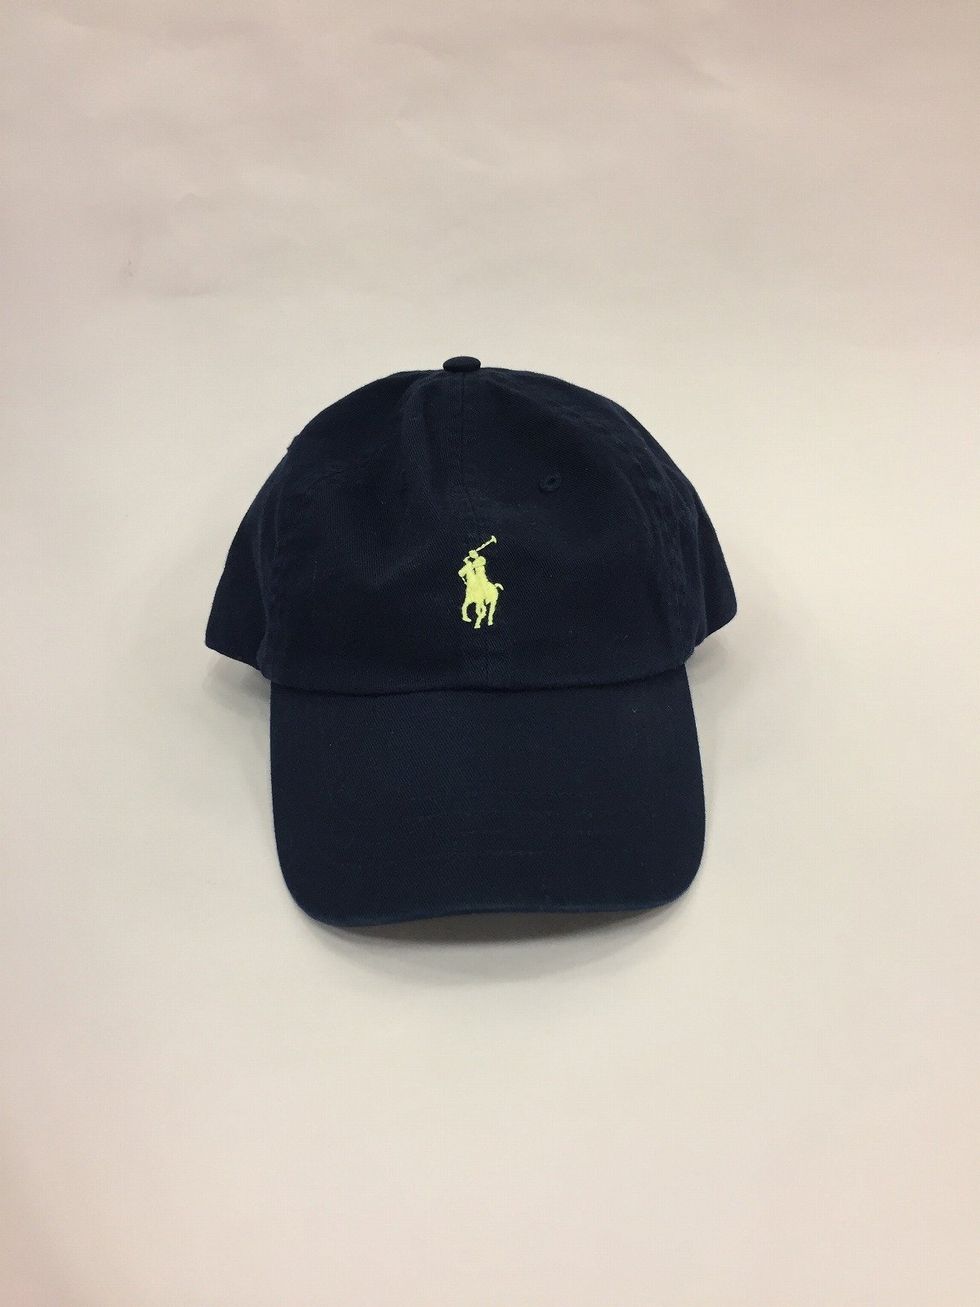 Cap, Clothing, Black, Baseball cap, Headgear, Cricket cap, Hat, Fashion accessory, Logo, 